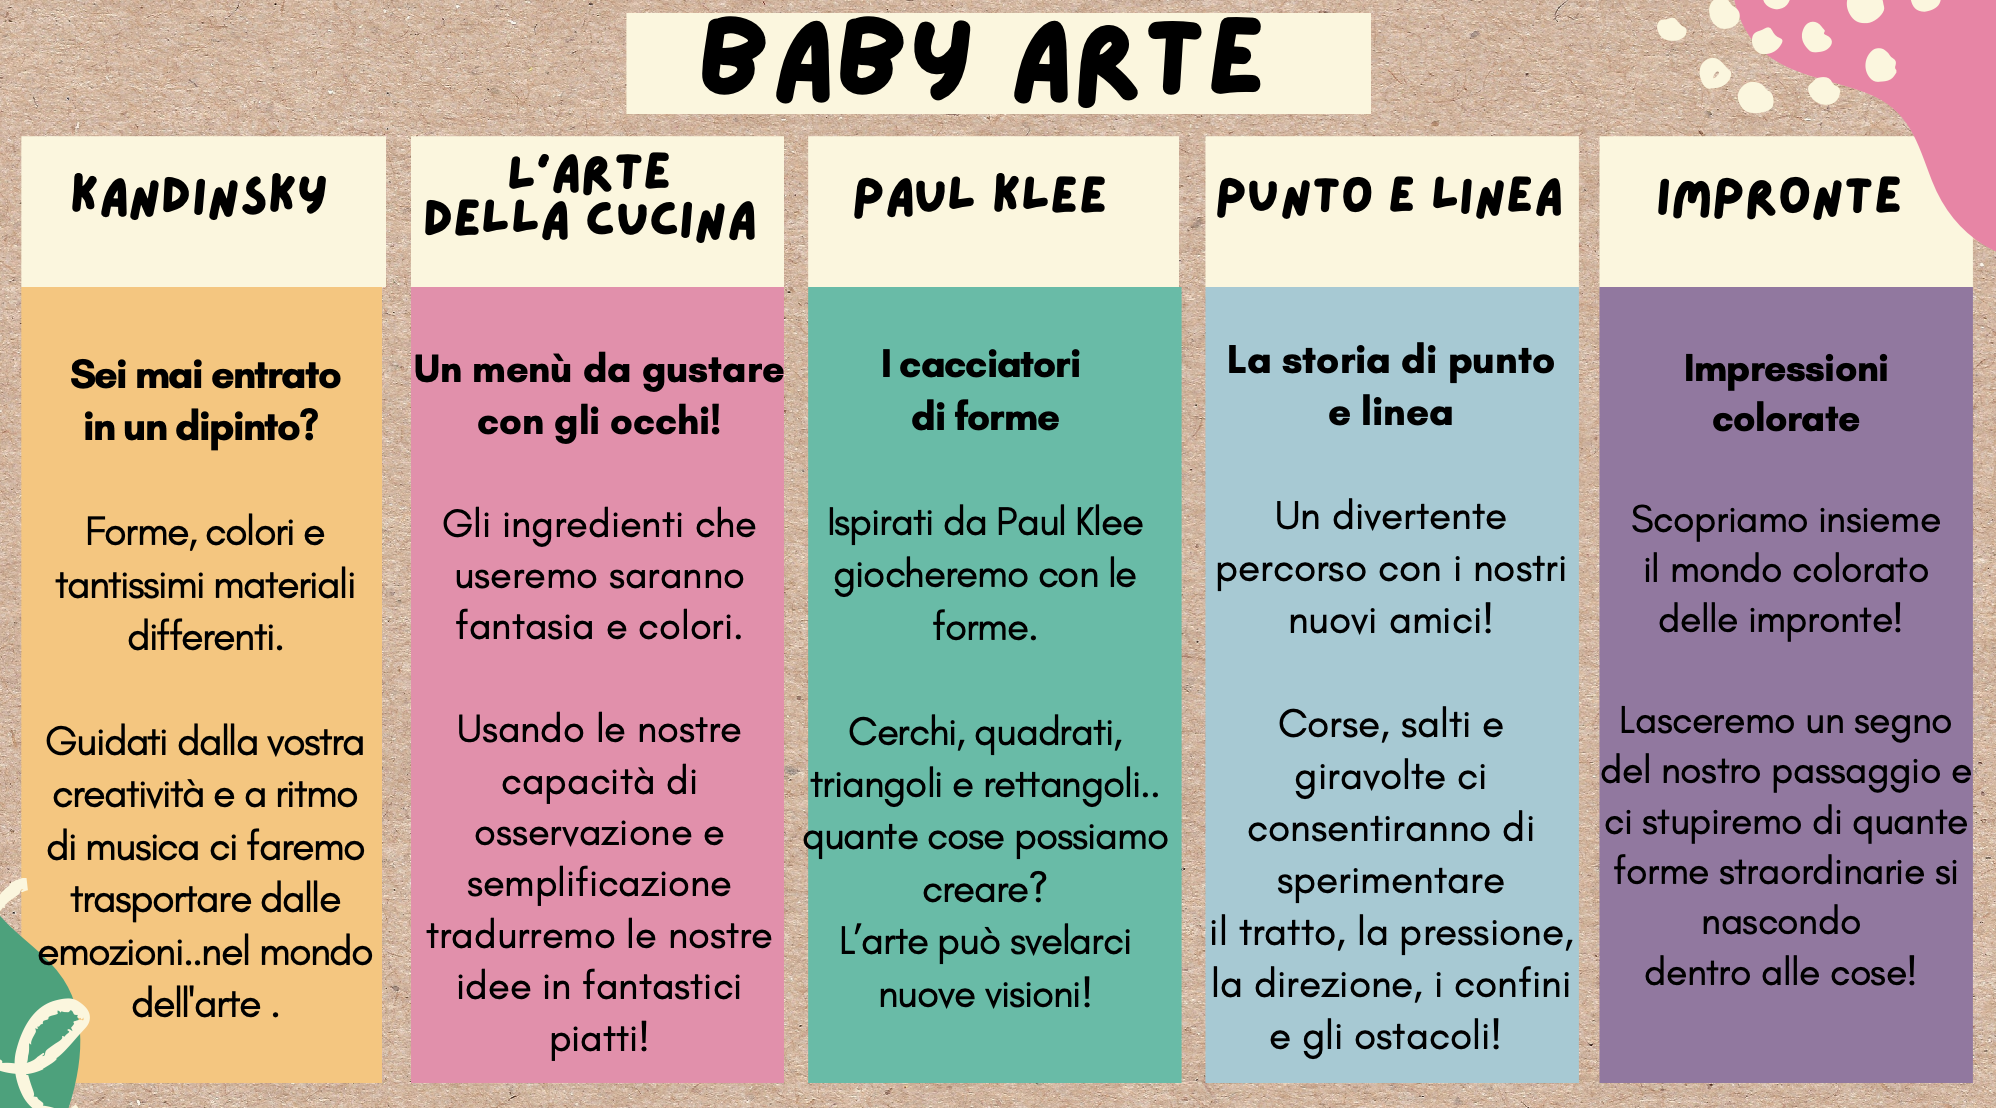 Programma Baby Arte